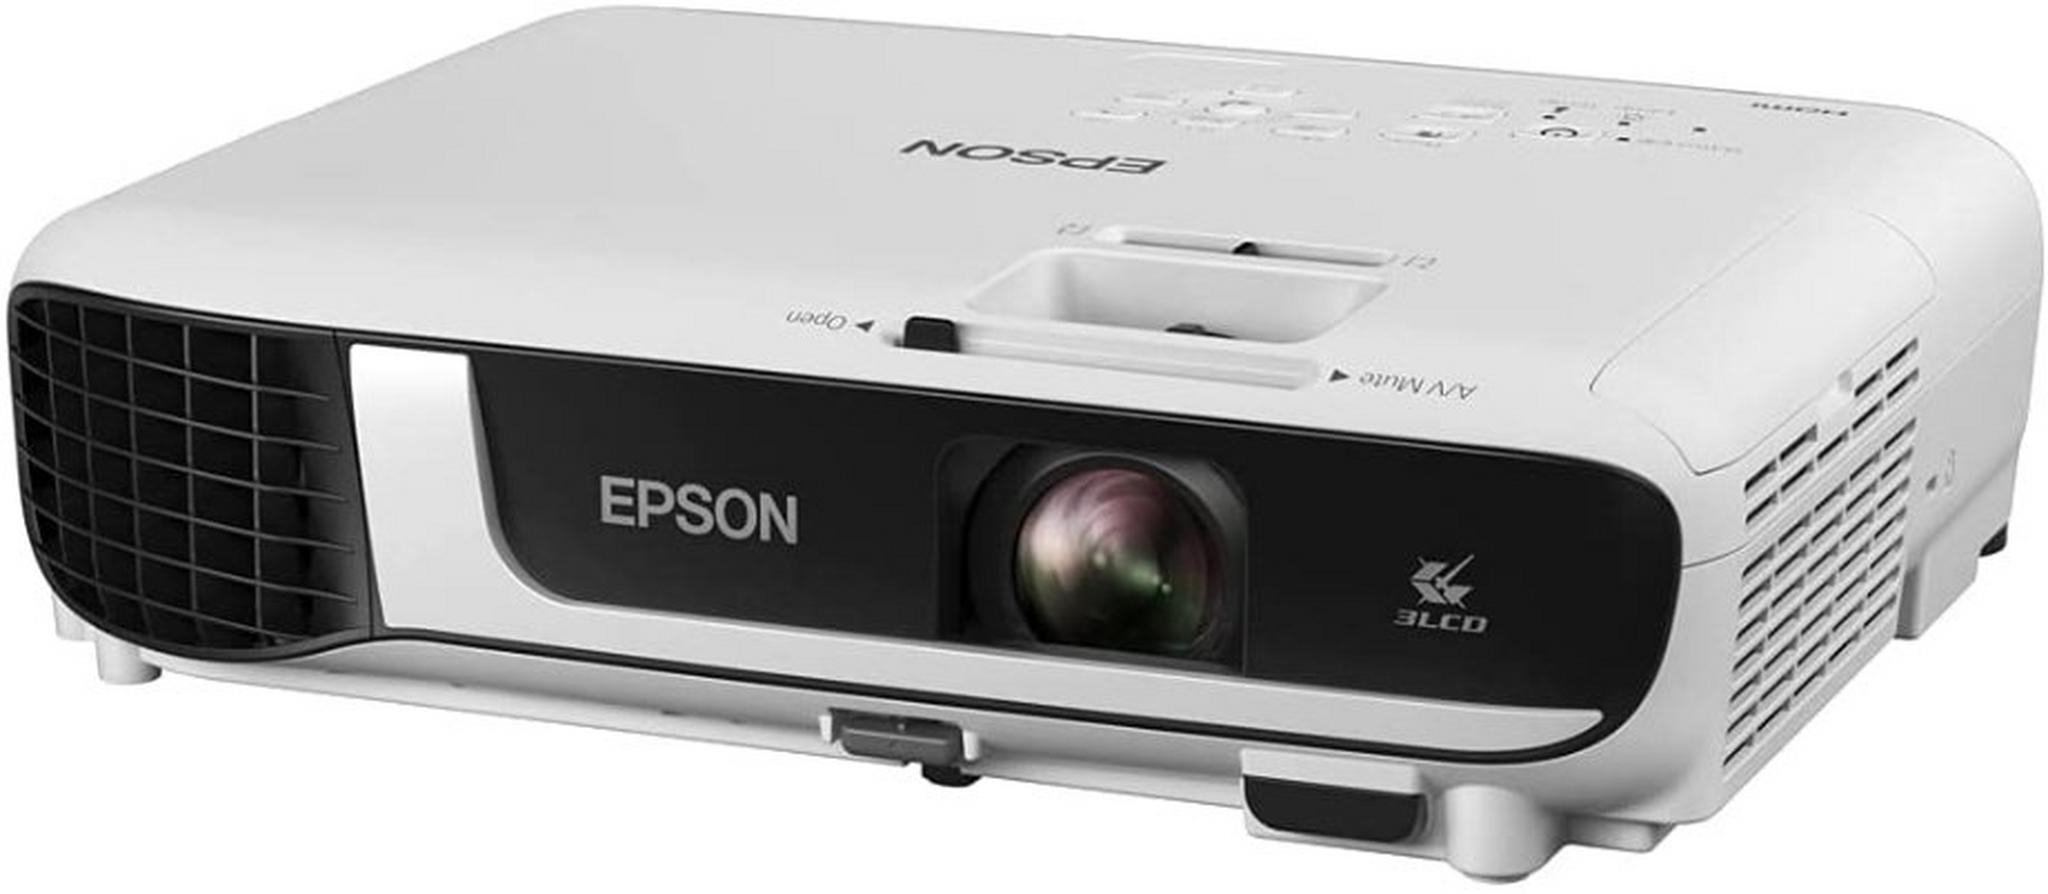 Epson 3,800 Lumens XGA Projector (EB-X51)